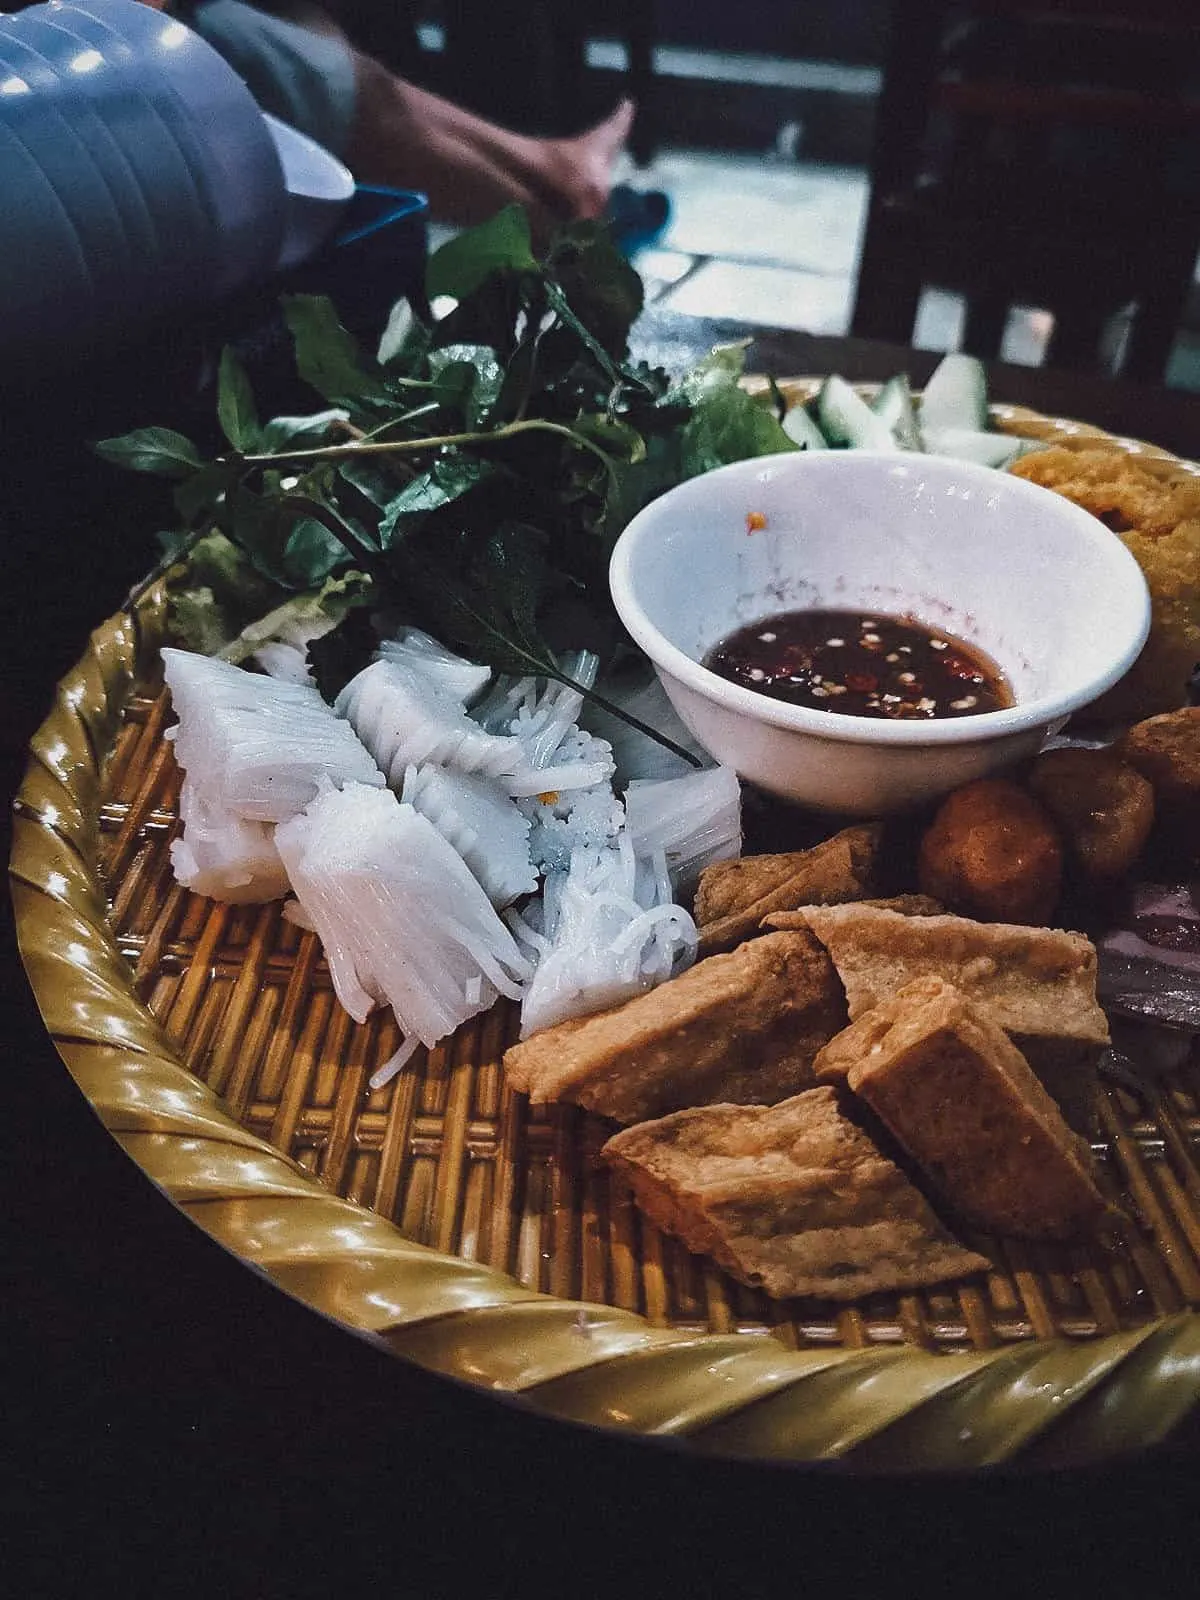 Tray of Vietnamese food at Dau Bac restaurant in Hoi An